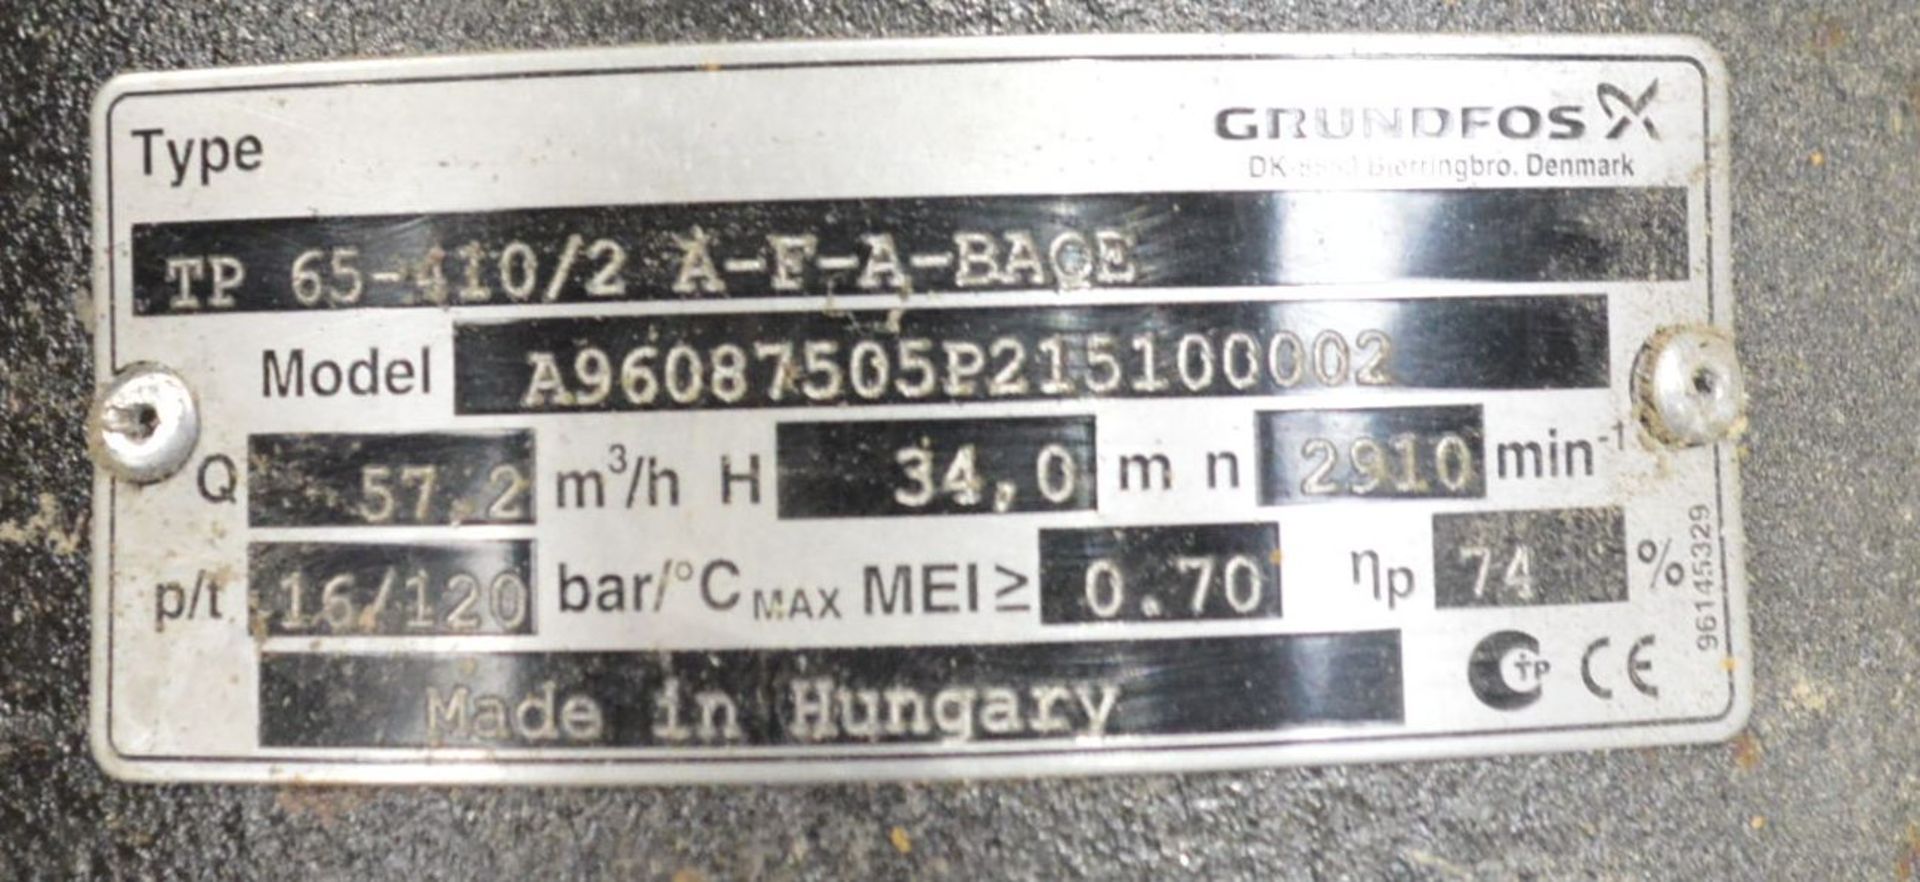 Grundfos TP.66-410/2 A-F-A-BAQE Pump, model A96087505P215100002, 57.2m³/h, with electric motor - Image 4 of 4